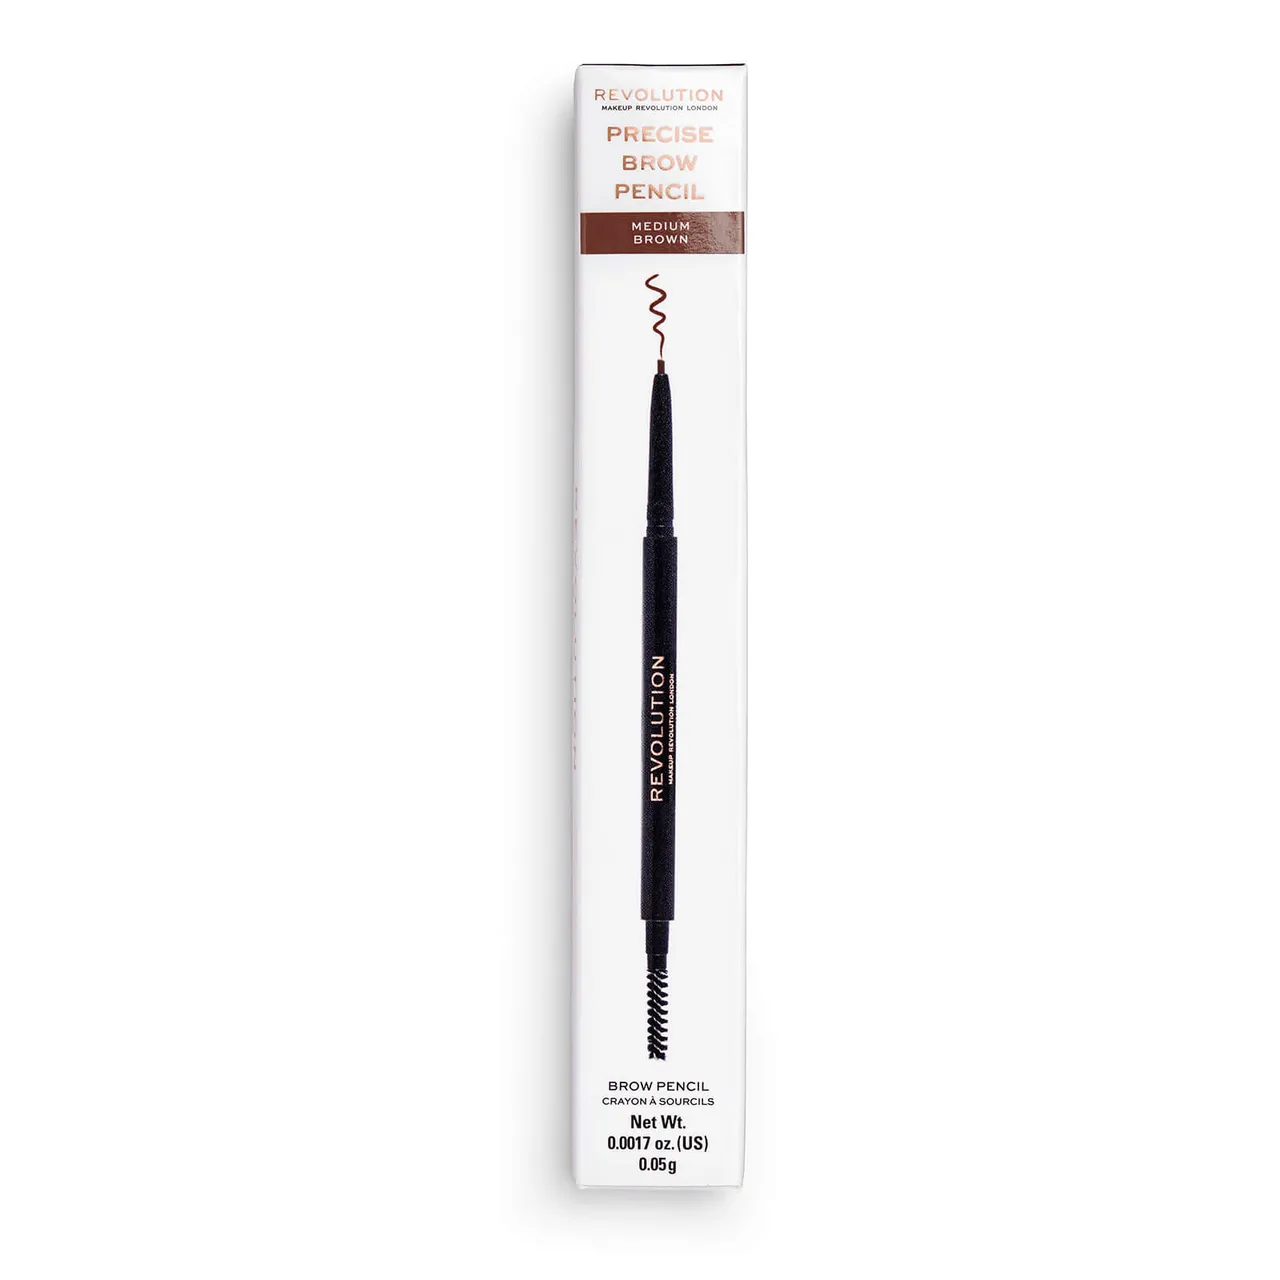 Makeup Revolution Precise Brow Pencil 0.05g (Various Shades) - Medium Brown